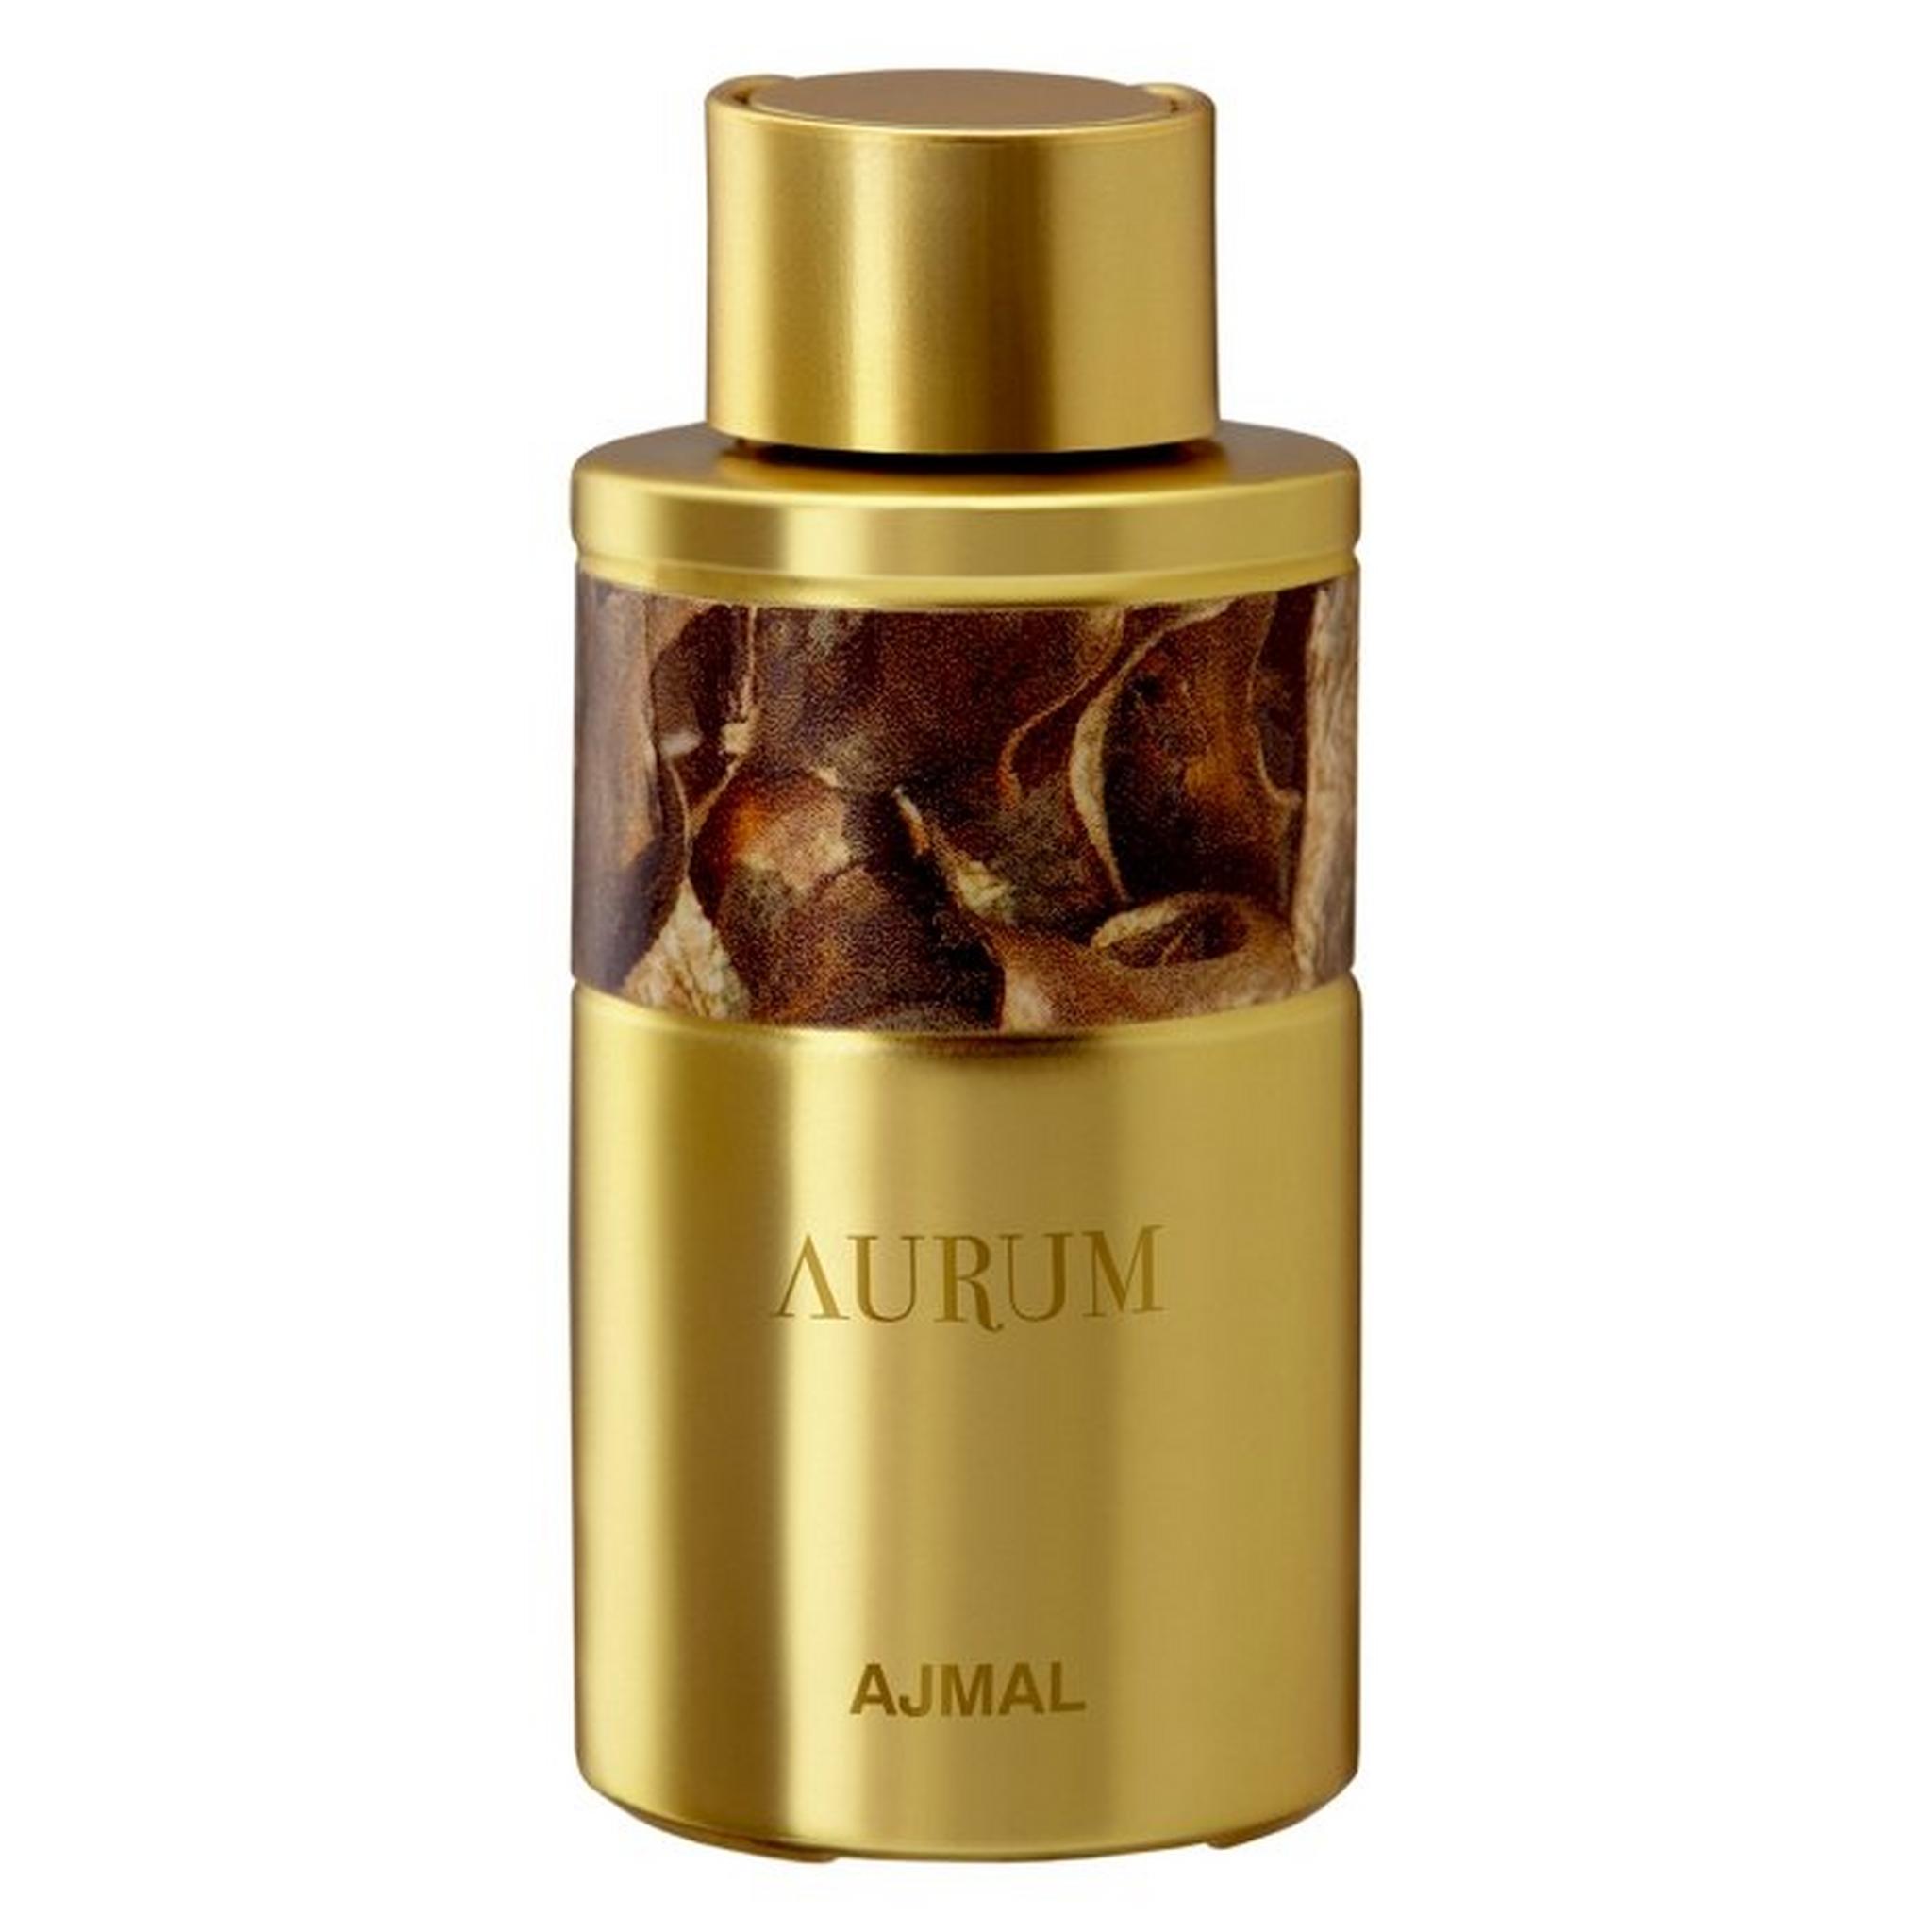 Ajmal Aurum Concentrated Perfum Oil 10Ml